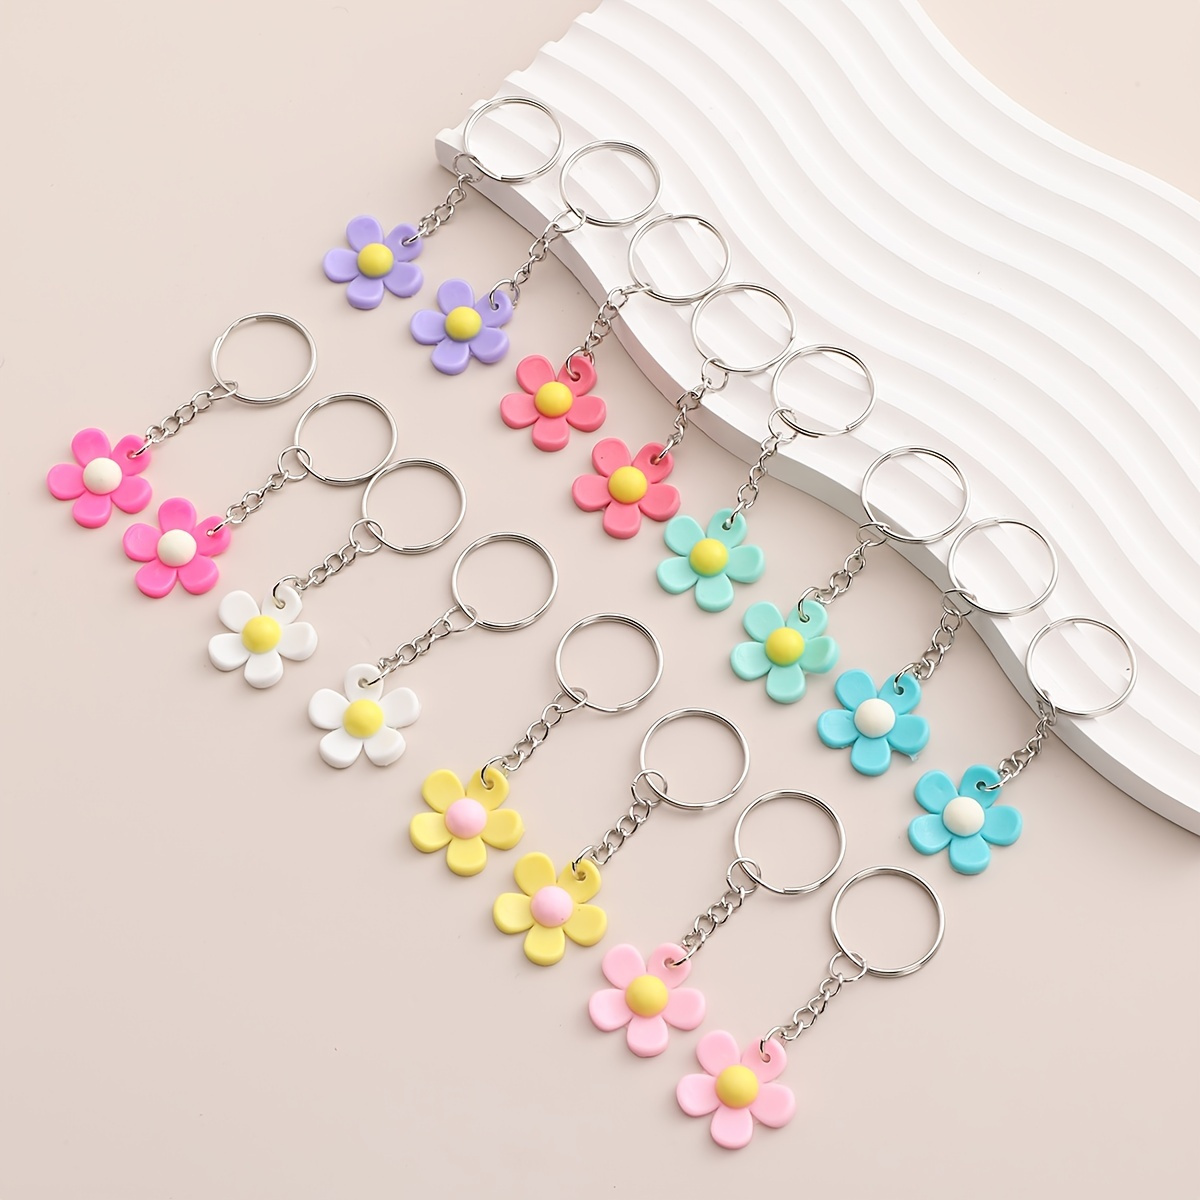 

16pcs Pvc Sun Flower Keychain Fashion Cute Cartoon Colorful Bag Key Chain Keyring Ornament Bag Purse Charm Accessories